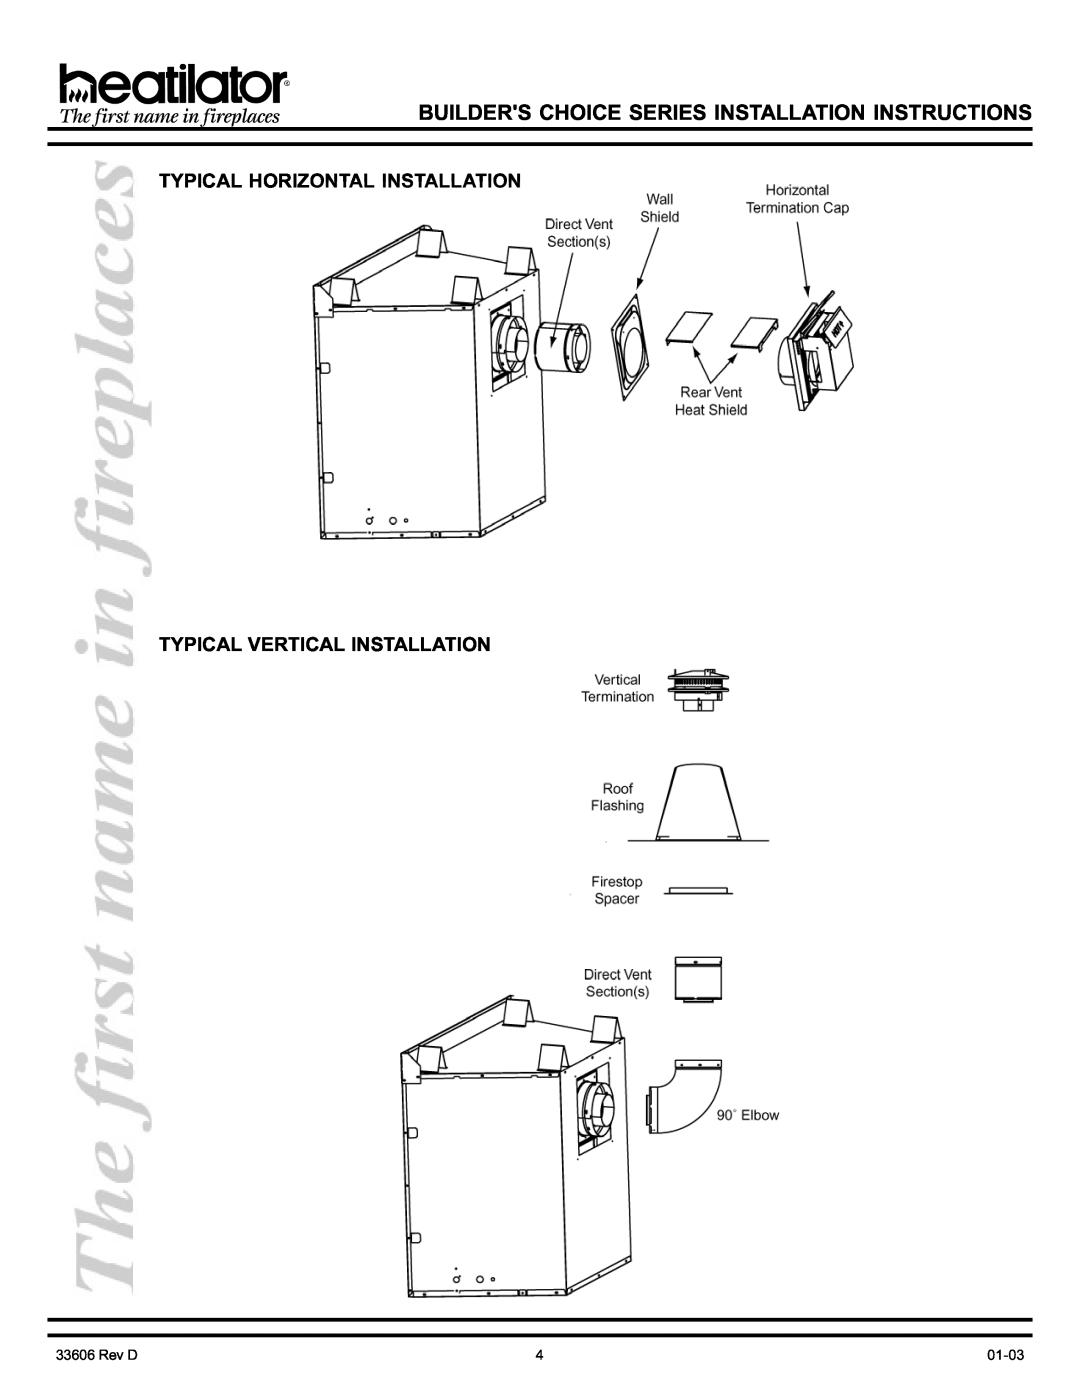 Heatiator BCDV36 manual Typical Horizontal Installation, Typical Vertical Installation, Rev D, 01-03 